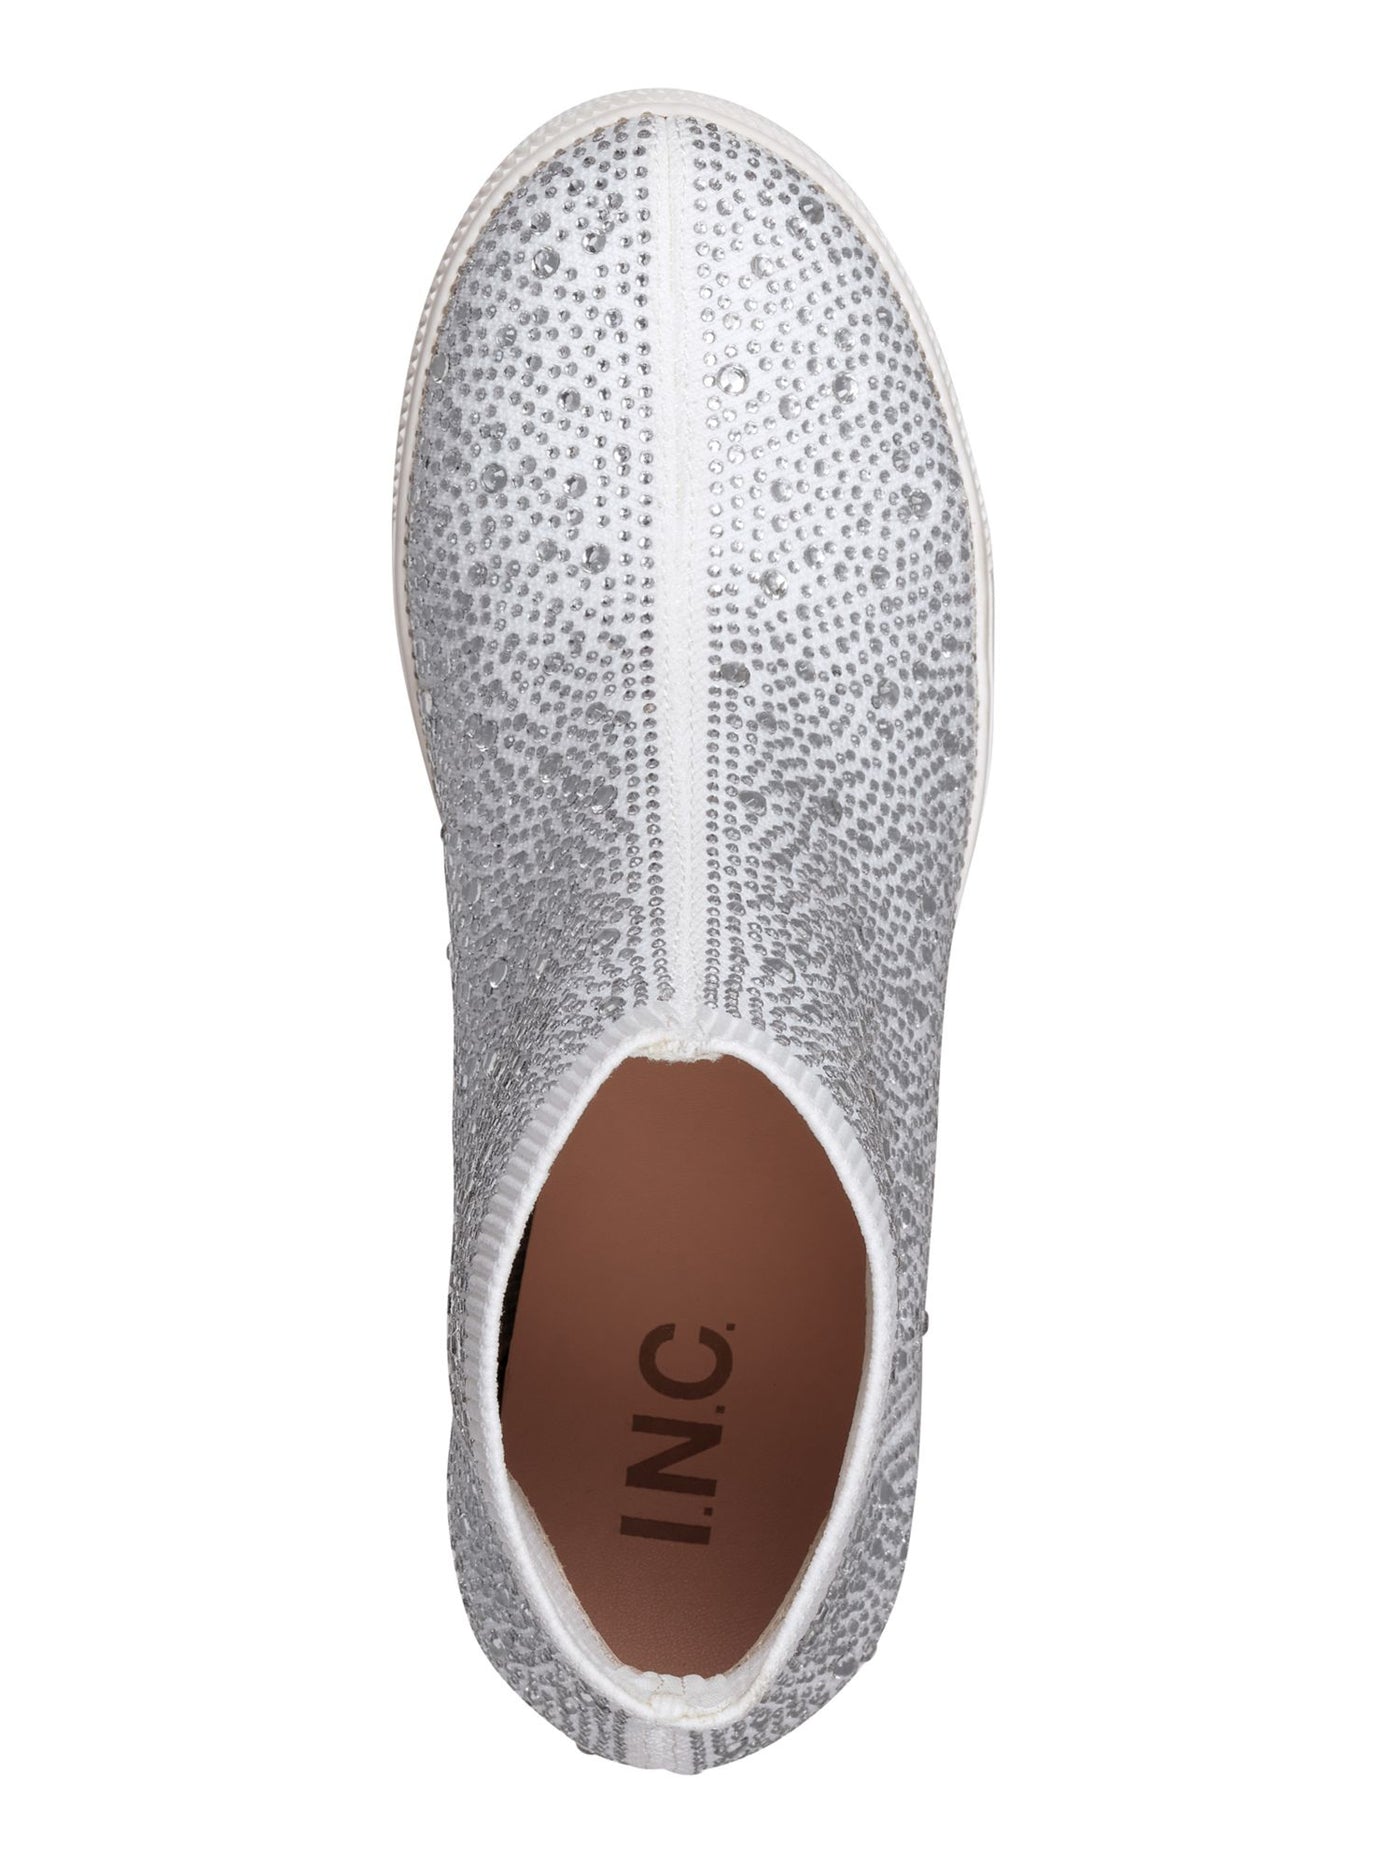 INC Womens White Rhinestone Stretch Deena Round Toe Slip On Athletic Sneakers Shoes 5 M